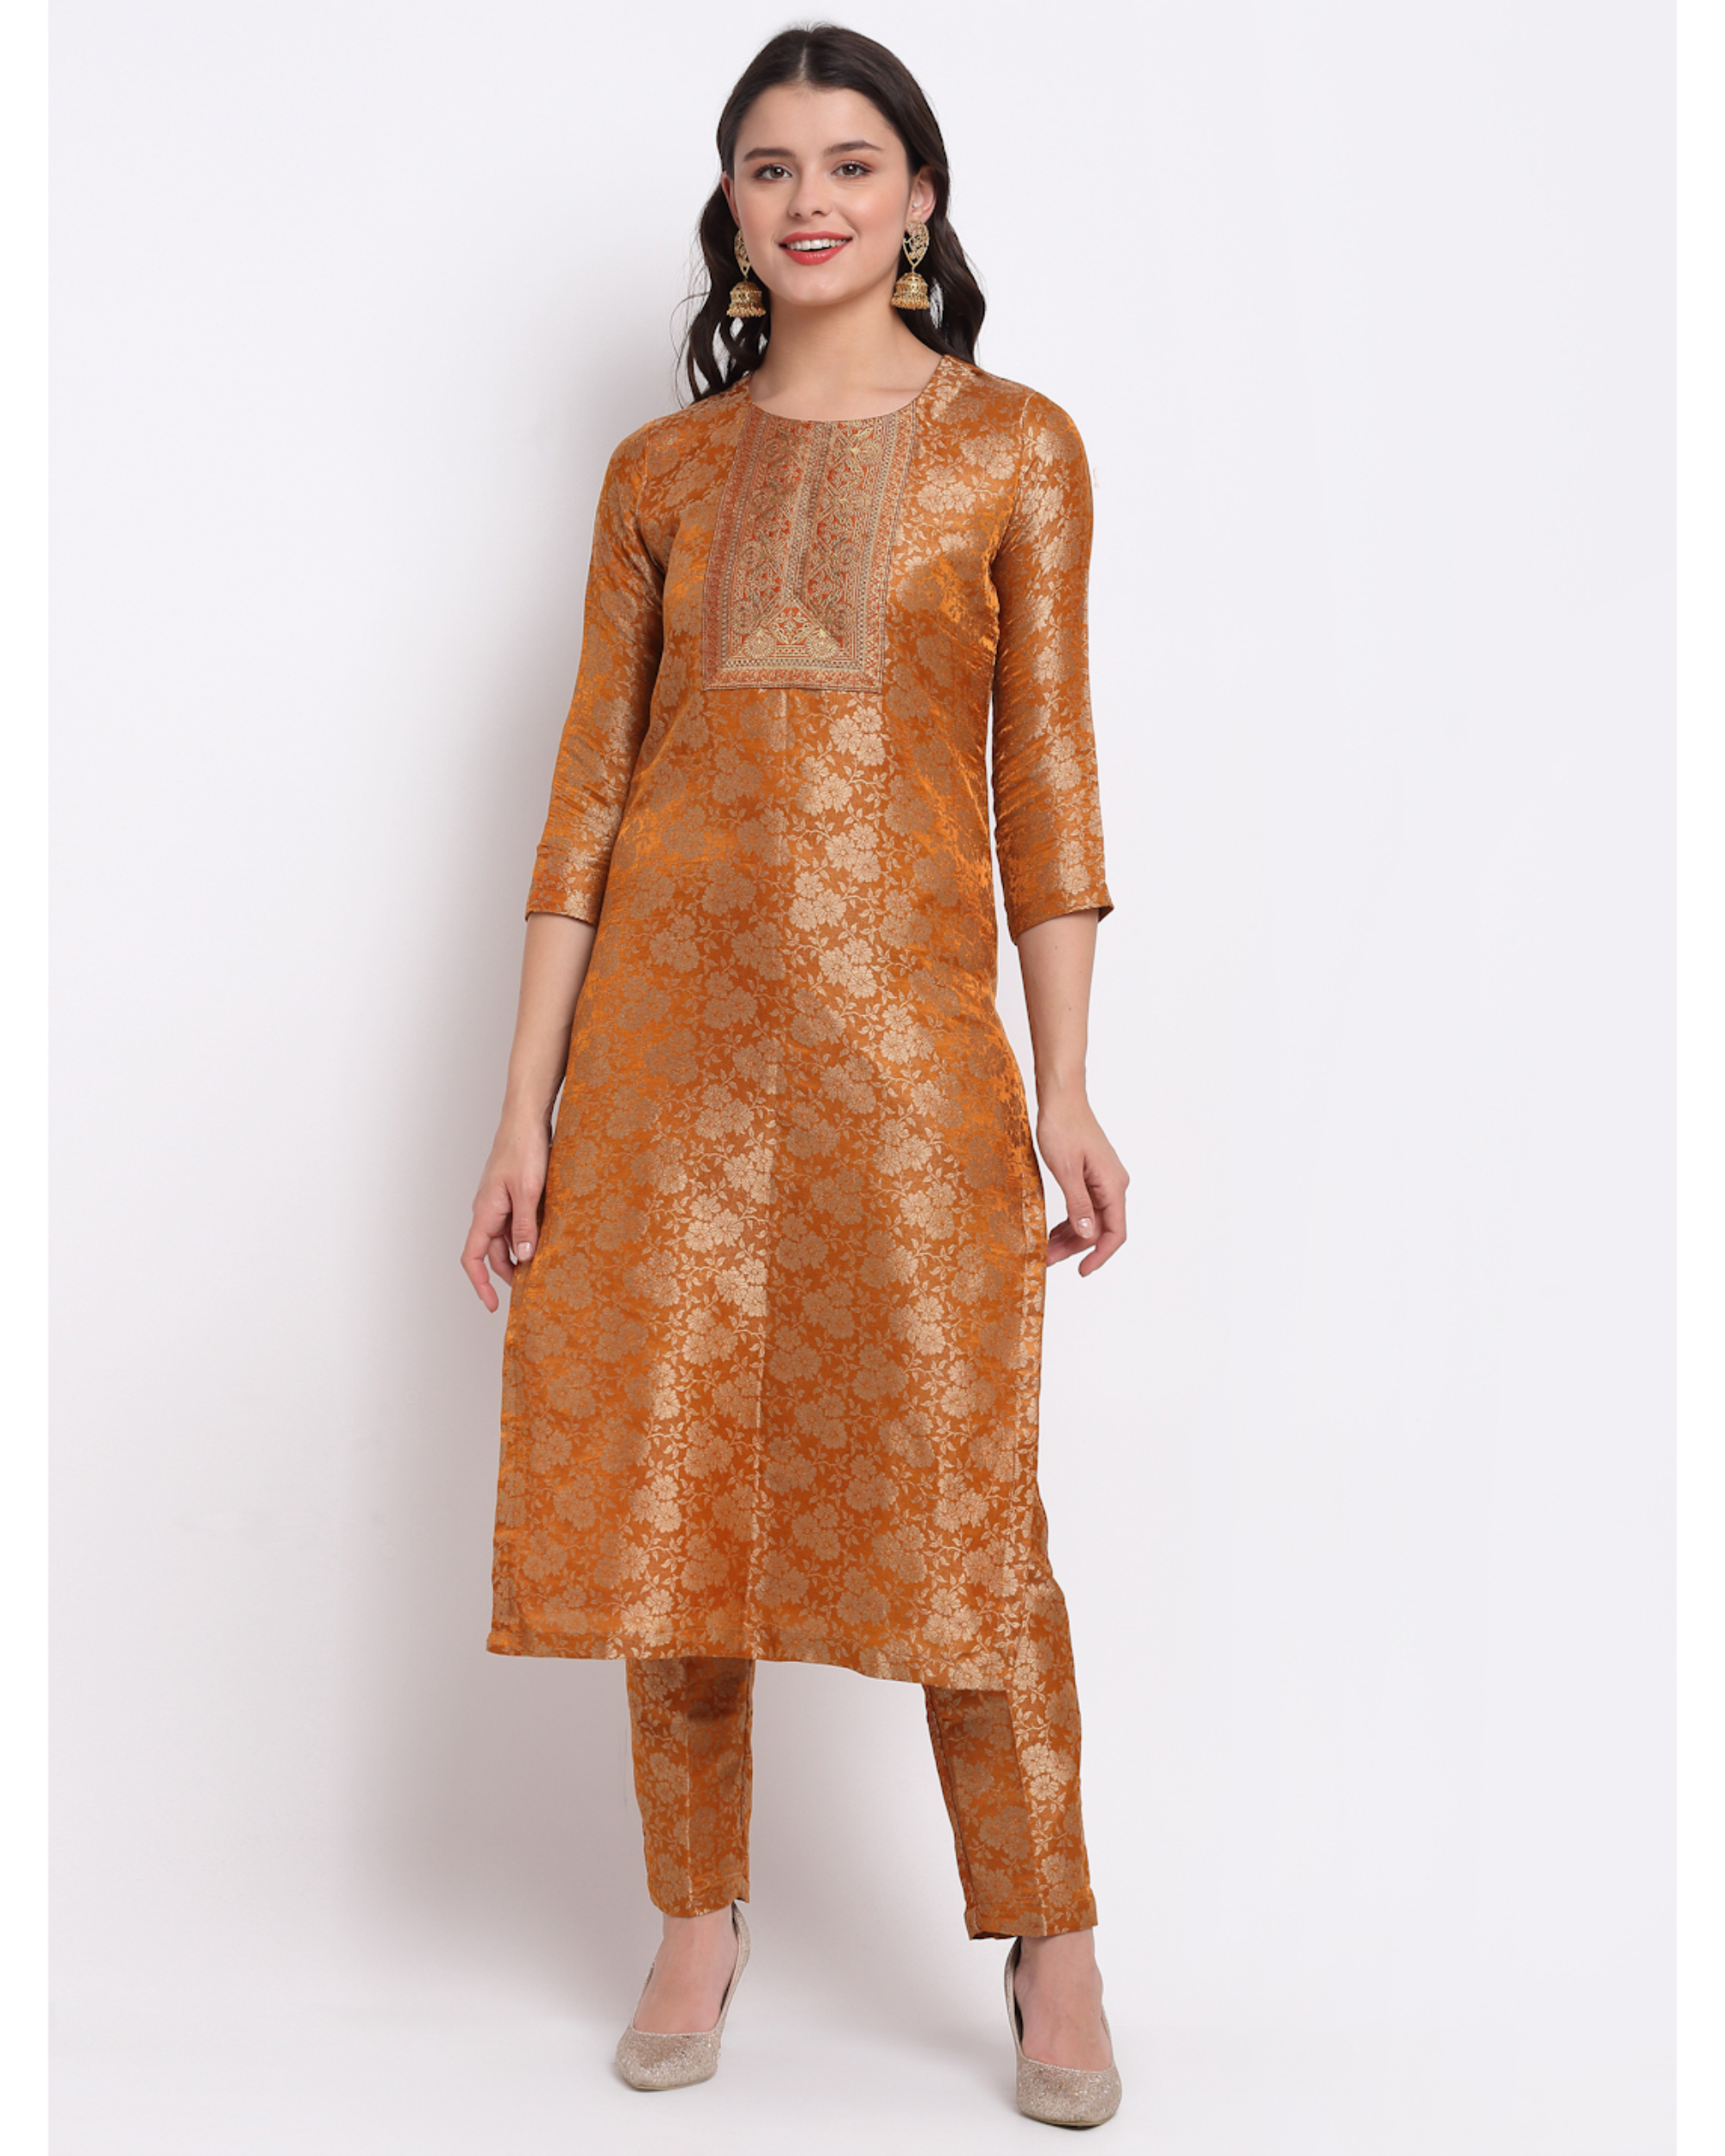 Buy Maroon Vintage Benarasi Silk Brocade Pants Online at Jaypore.com